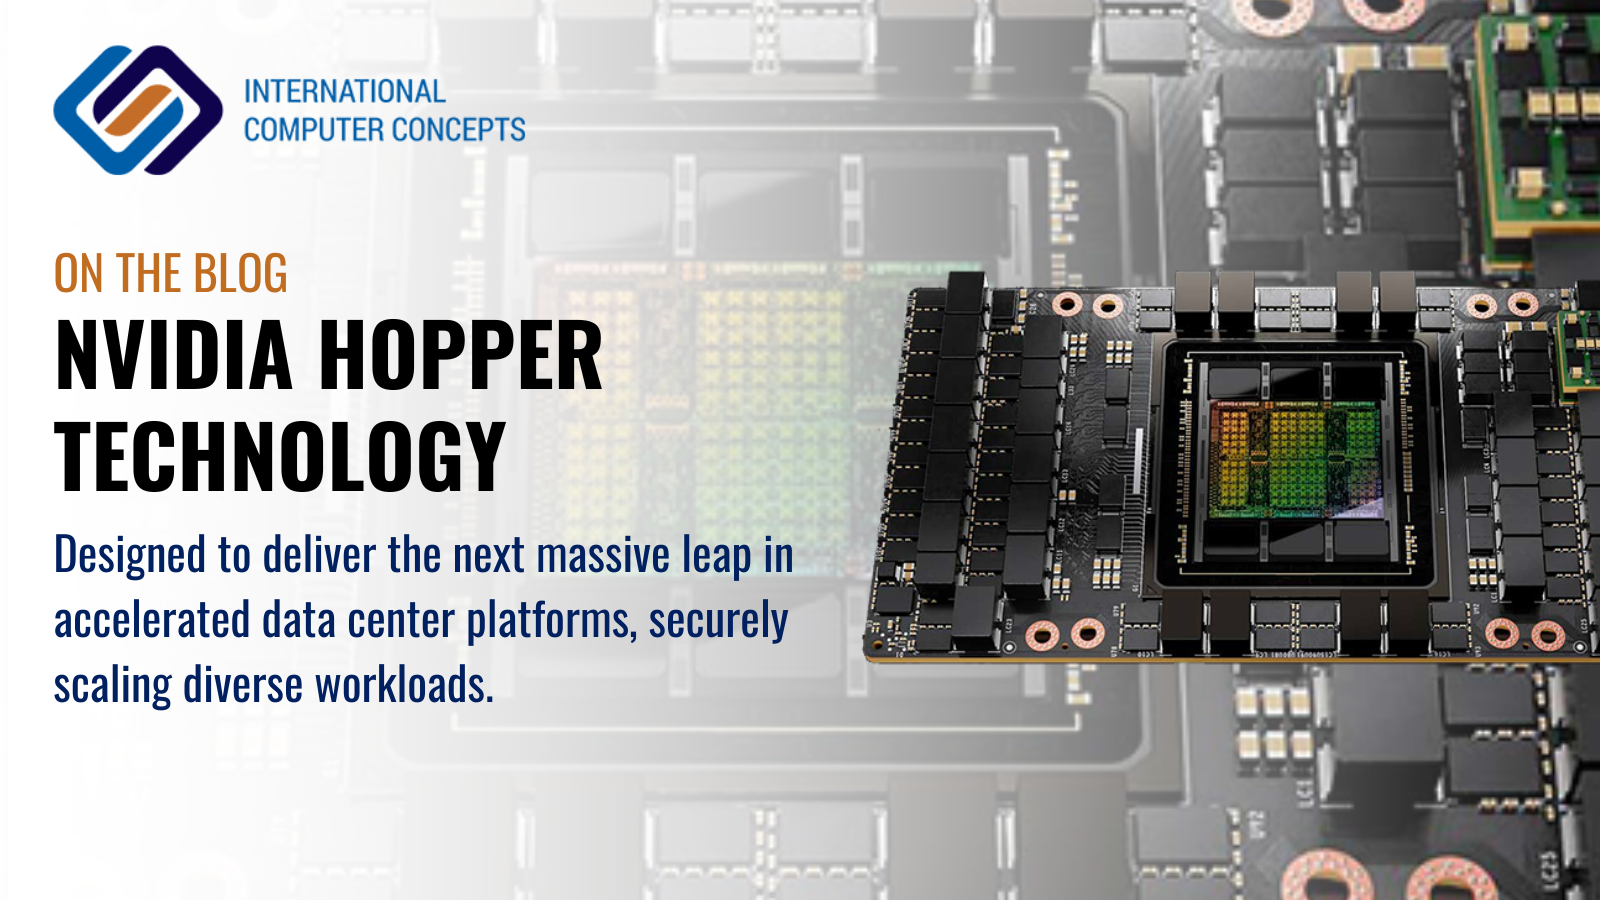 NVIDIA Hopper Technology